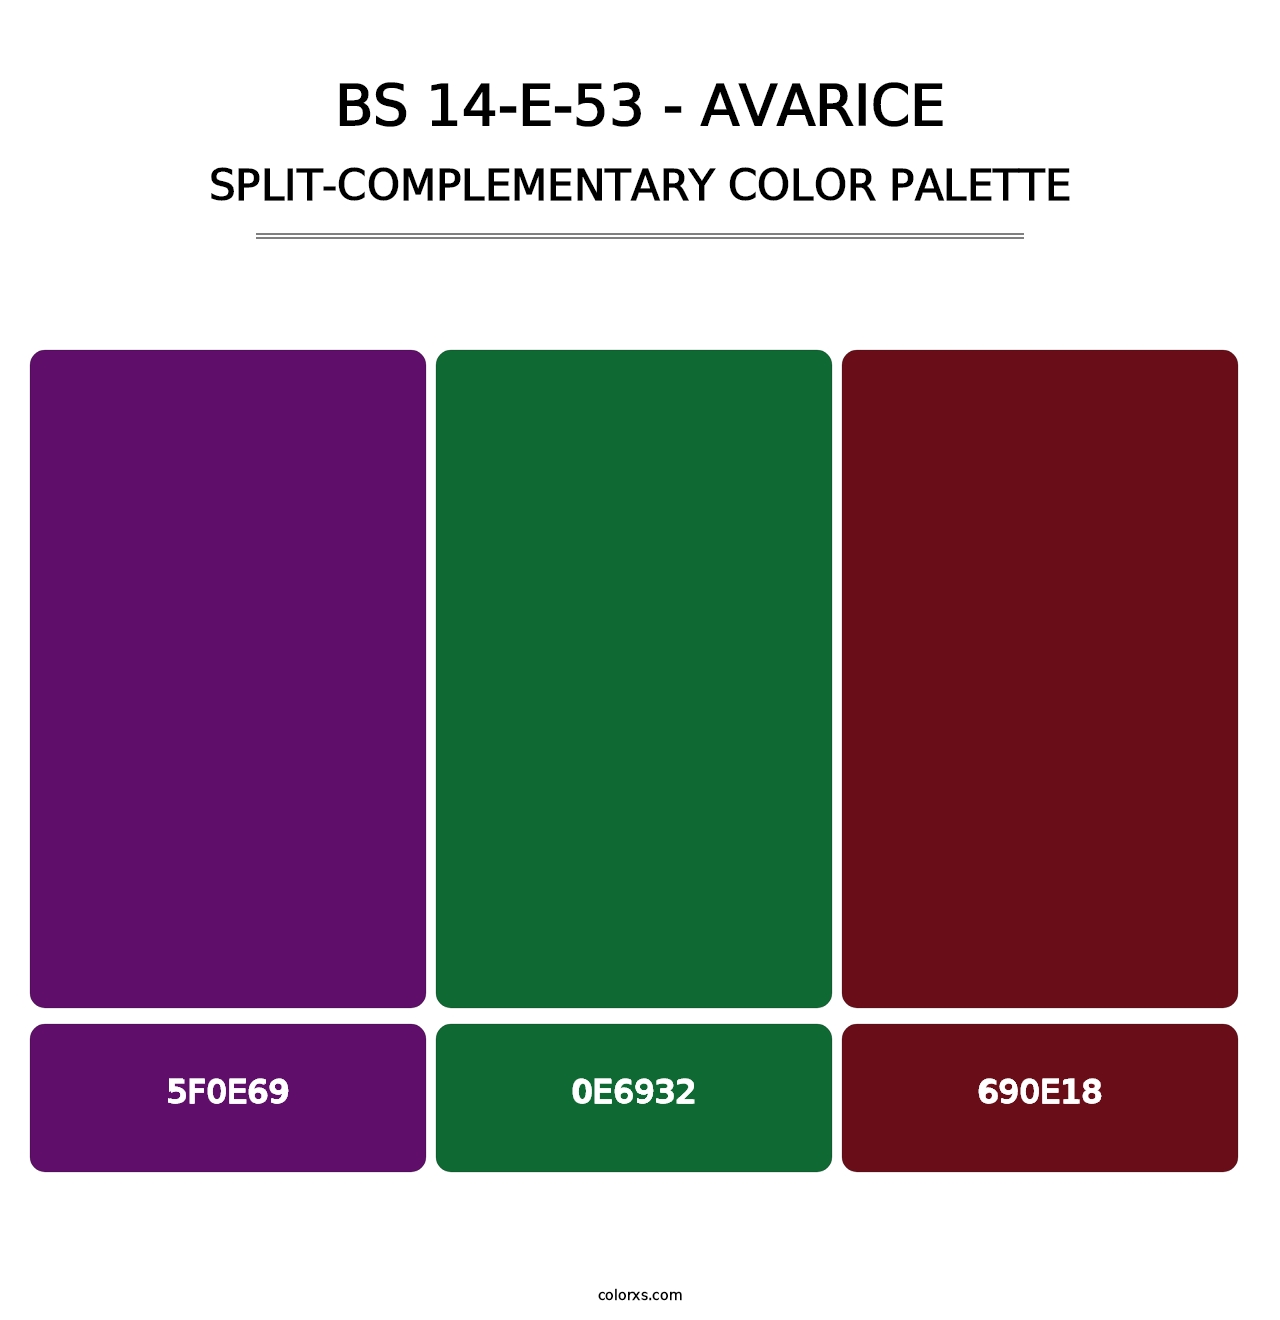 BS 14-E-53 - Avarice - Split-Complementary Color Palette